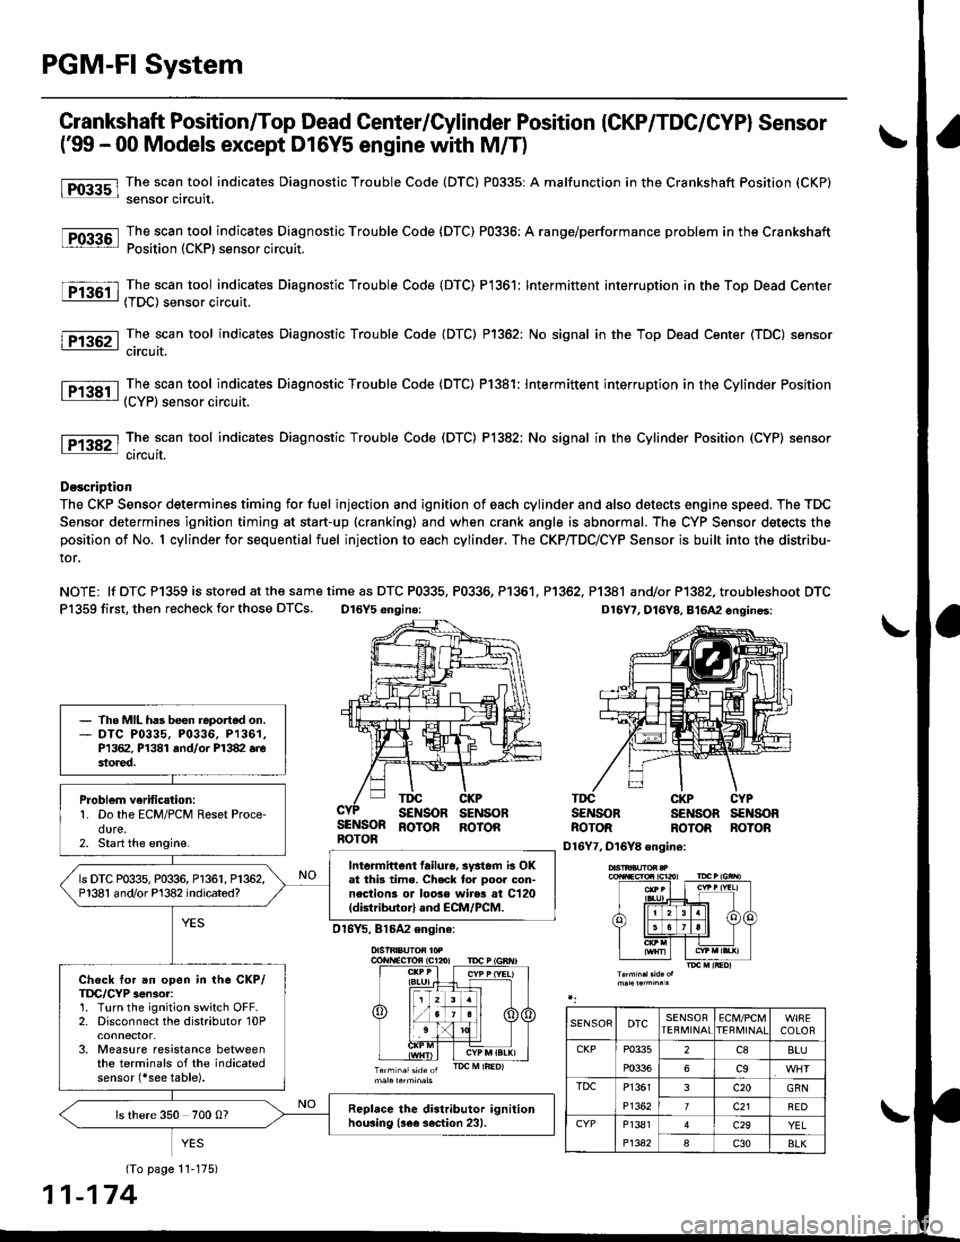 HONDA CIVIC 1997 6.G Workshop Manual PGM-FI System
l-Fos3sl
tFos36l
tF1361 l
Fr362-1
tF13sil
Crankshaft Position/Top Dead Center/Cylinder Position (CKP/TDC/CYPI Sensor
f99 - 00 Models except D16Y5 engine with M/T)
The scan tool indicates